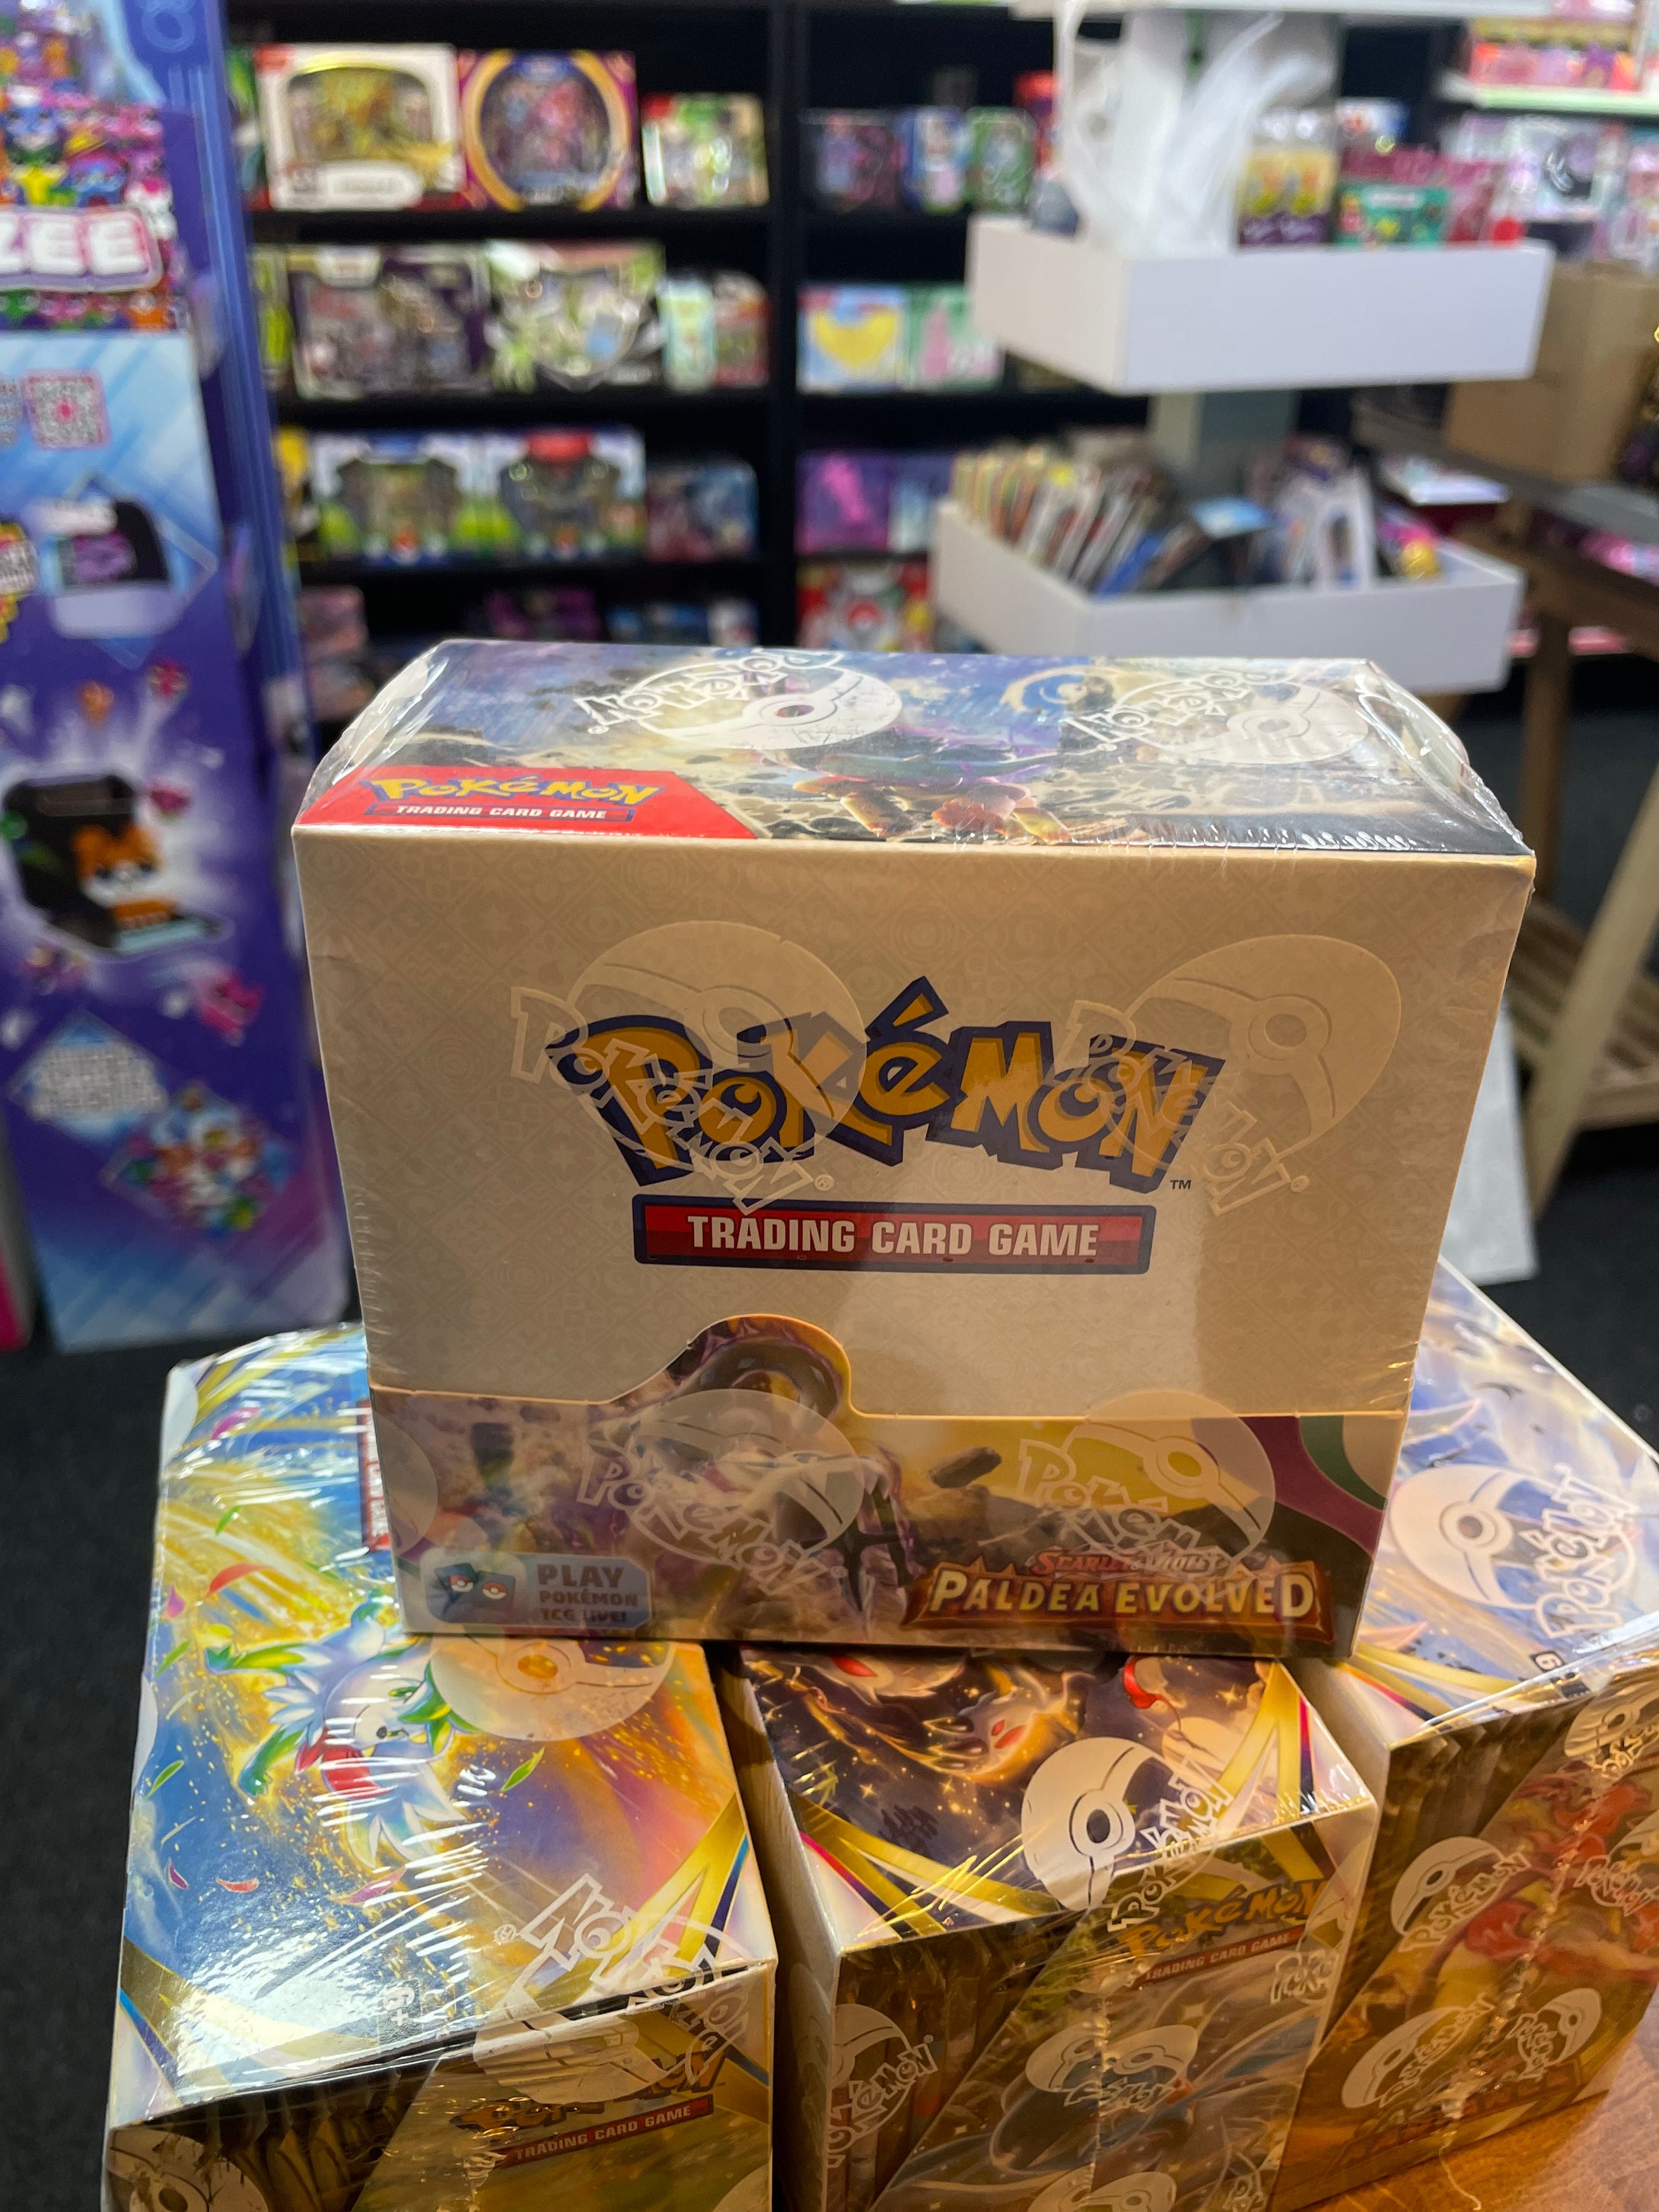 Full Factory Sealed carton of 36 Pokemon Paldea Booster Packs